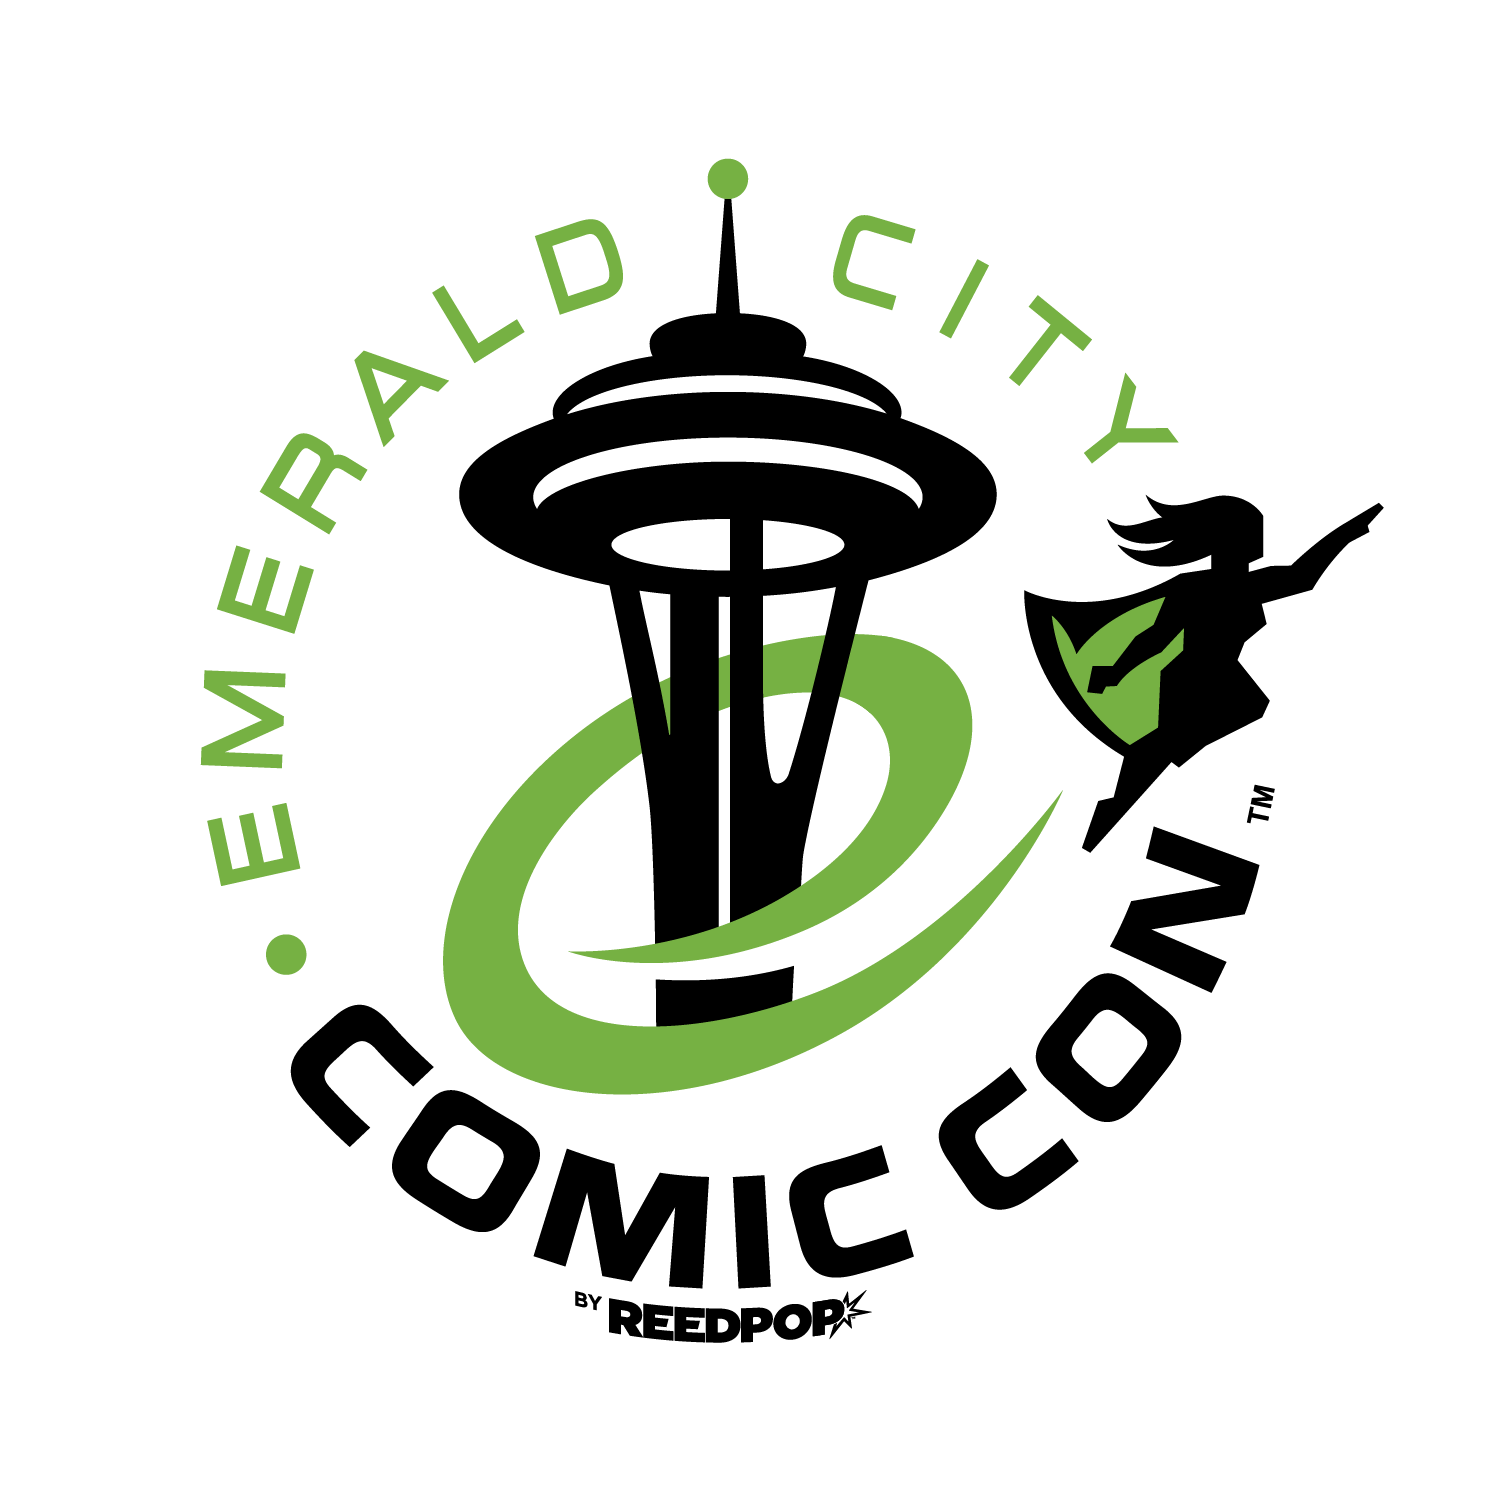 https://www.fortalezadelasoledad.com/imagenes/2023/02/26/Emerald-city-comic-con-logo.webp